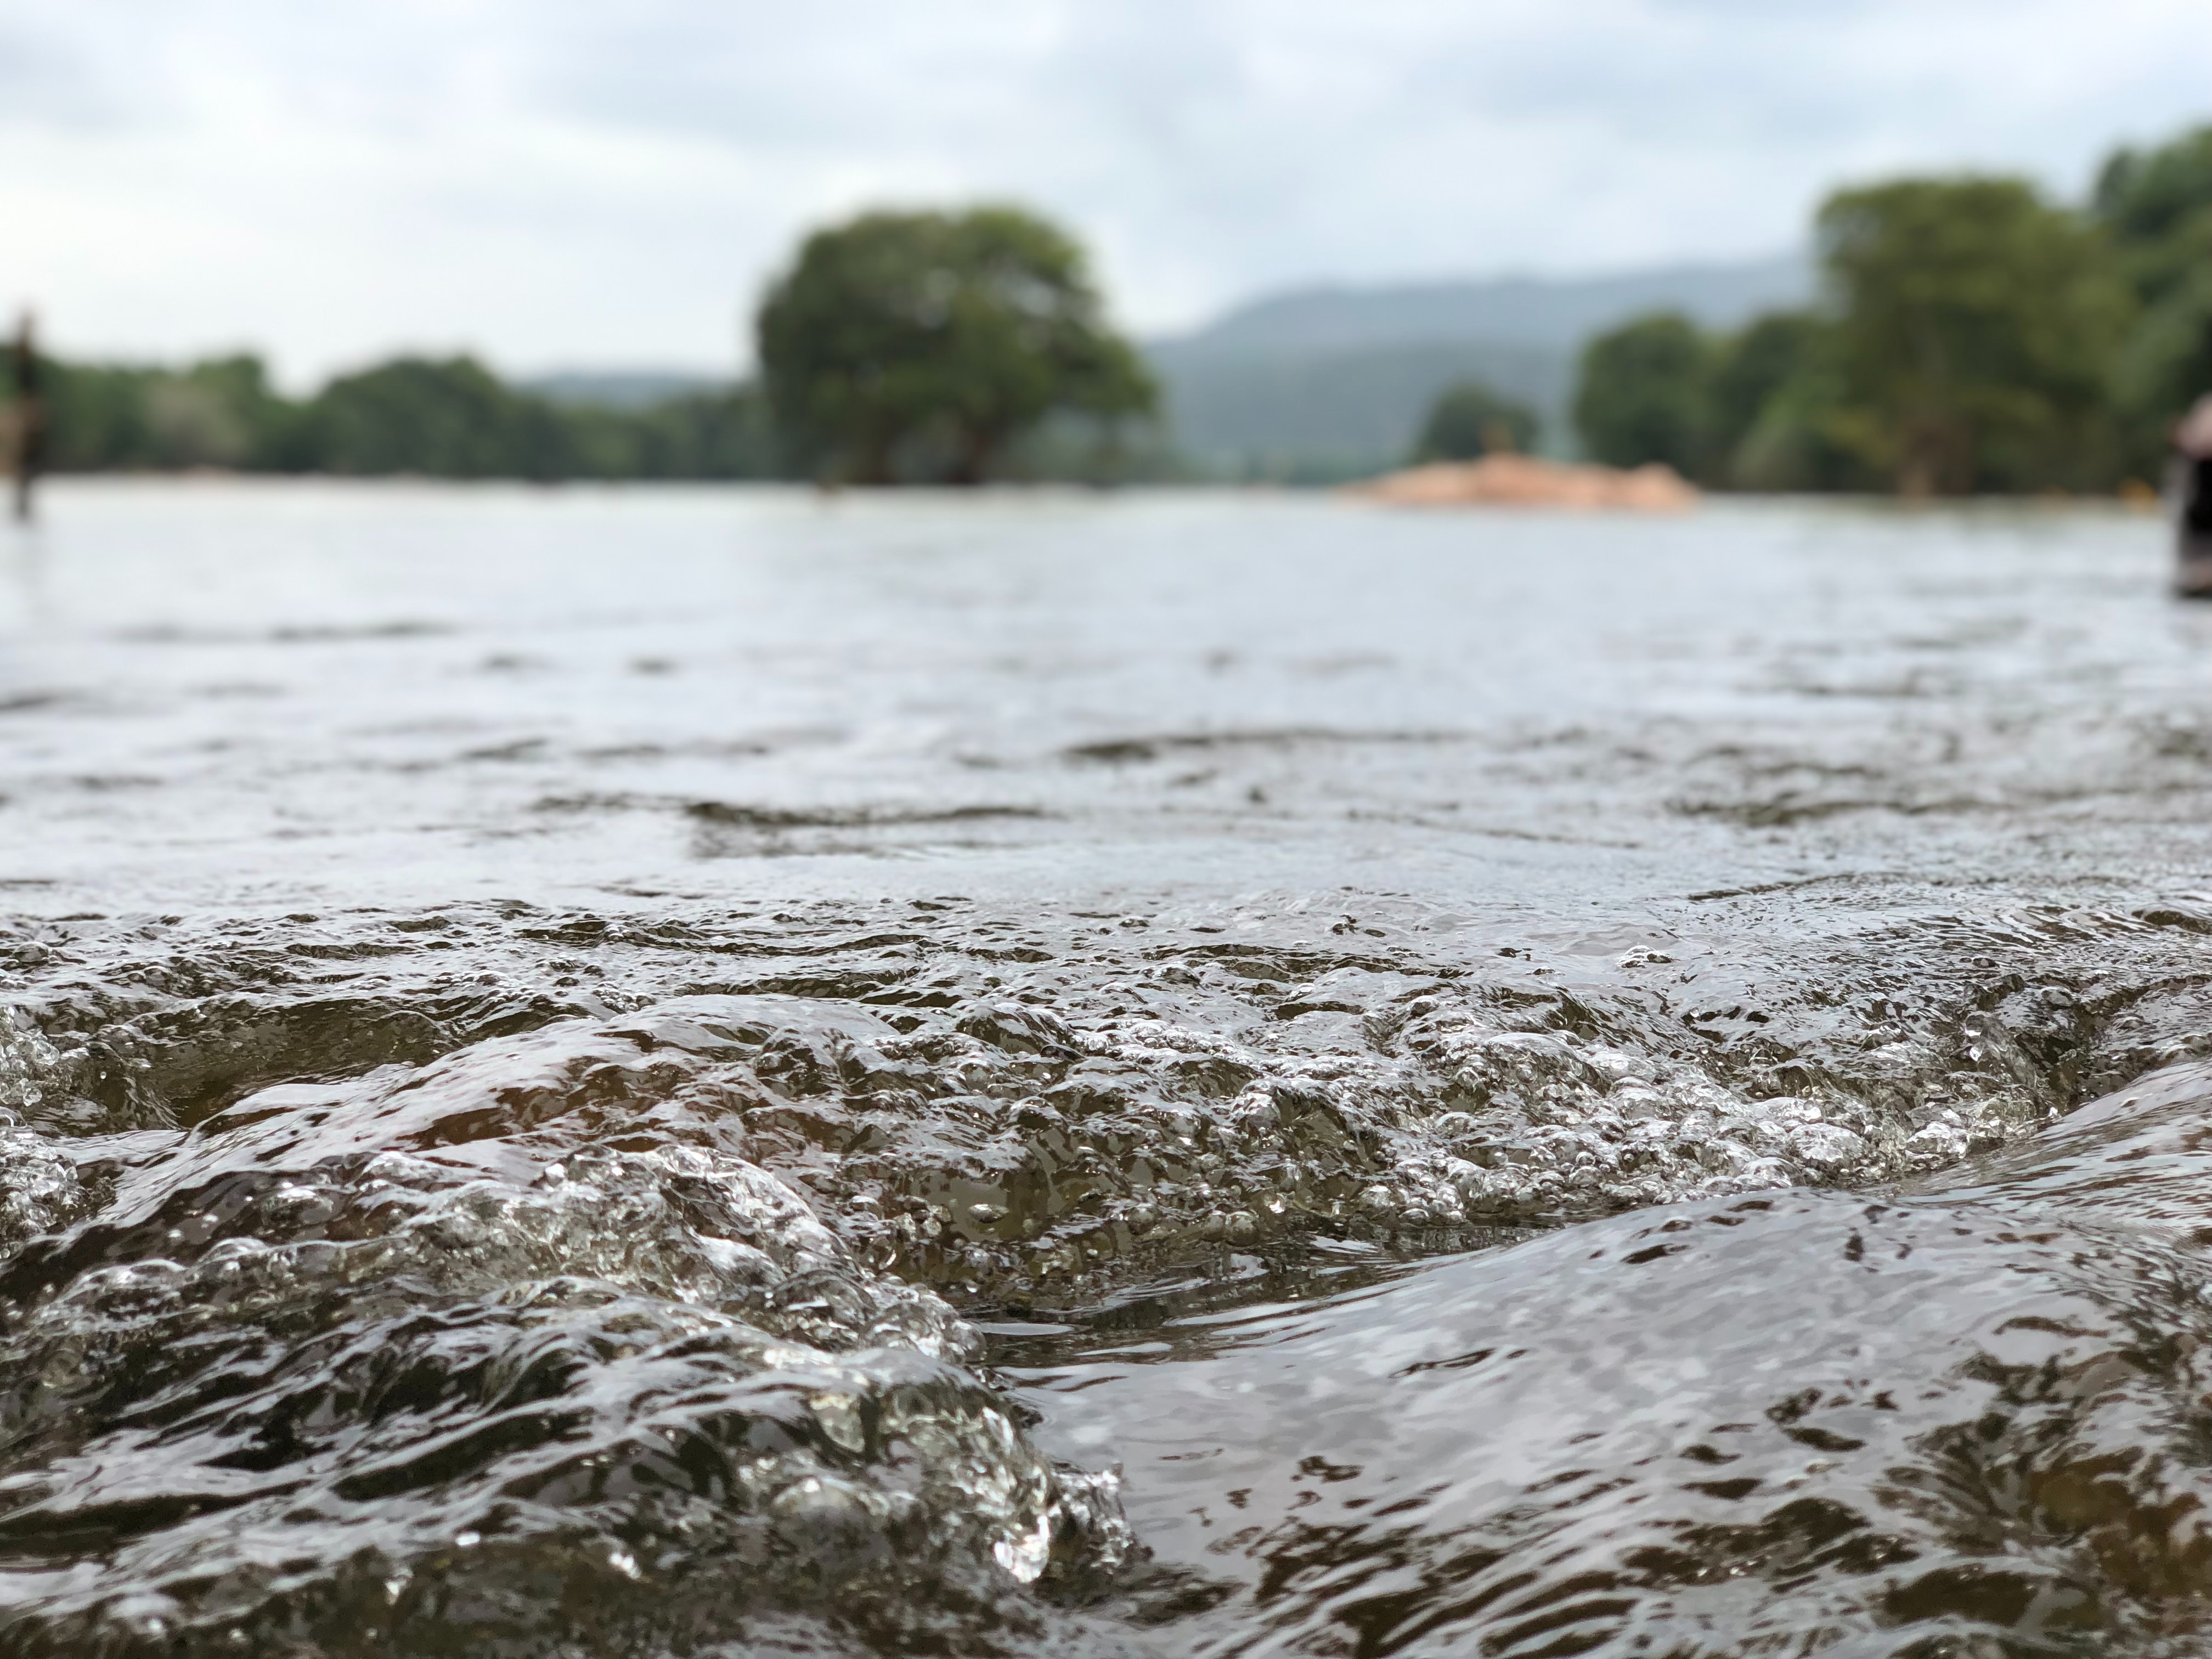 Kerala floods: Damaging rains match climate change forecasts